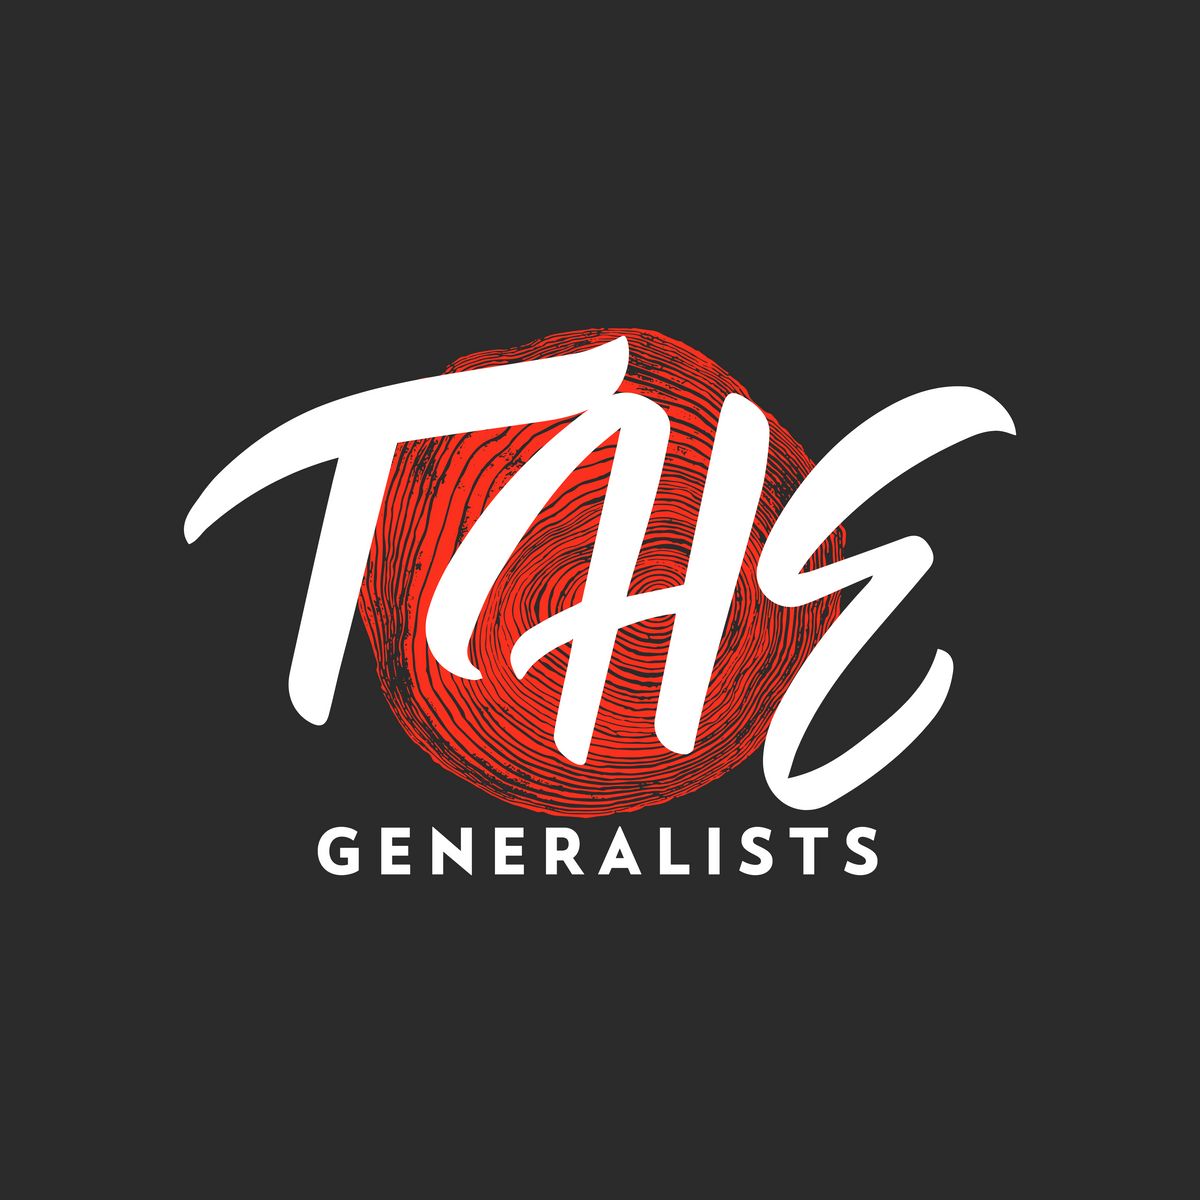 The Generalists